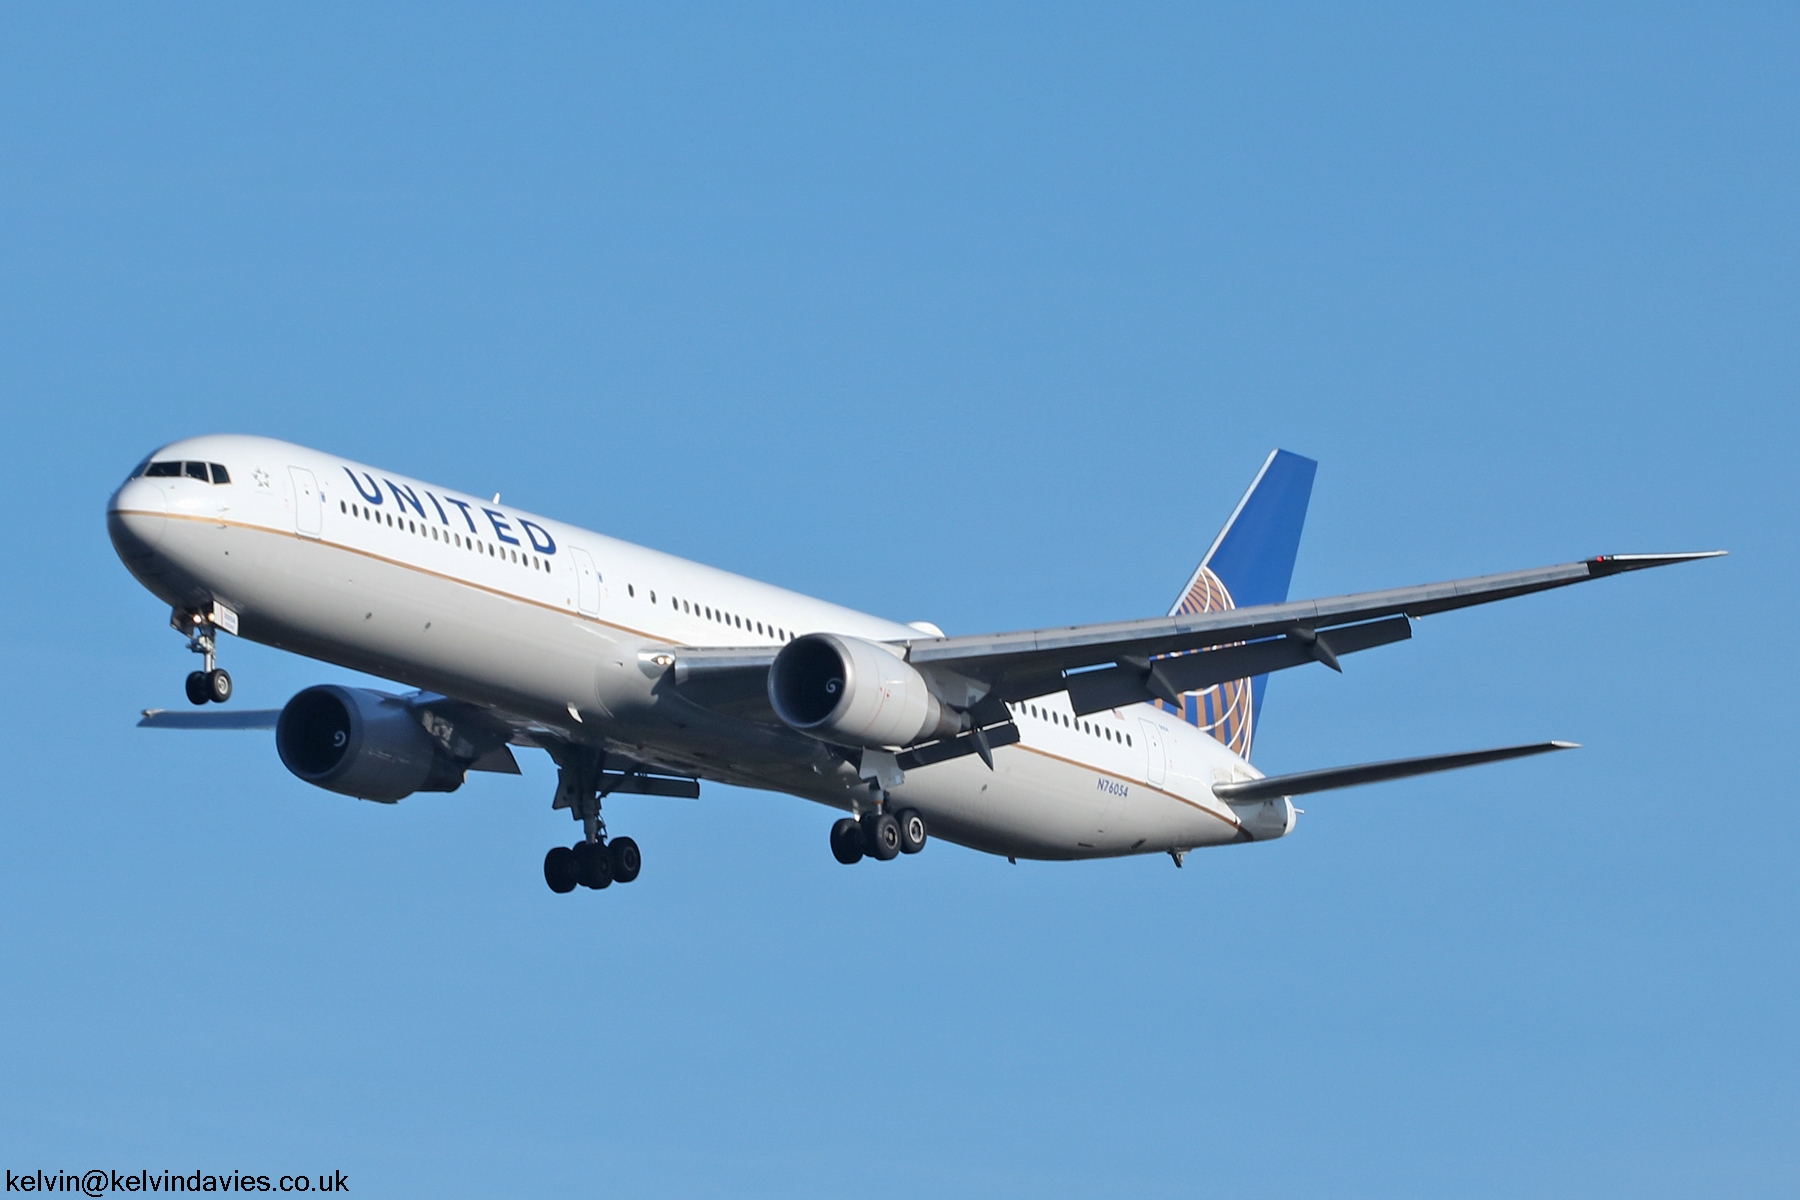 United Airlines 767 N76054